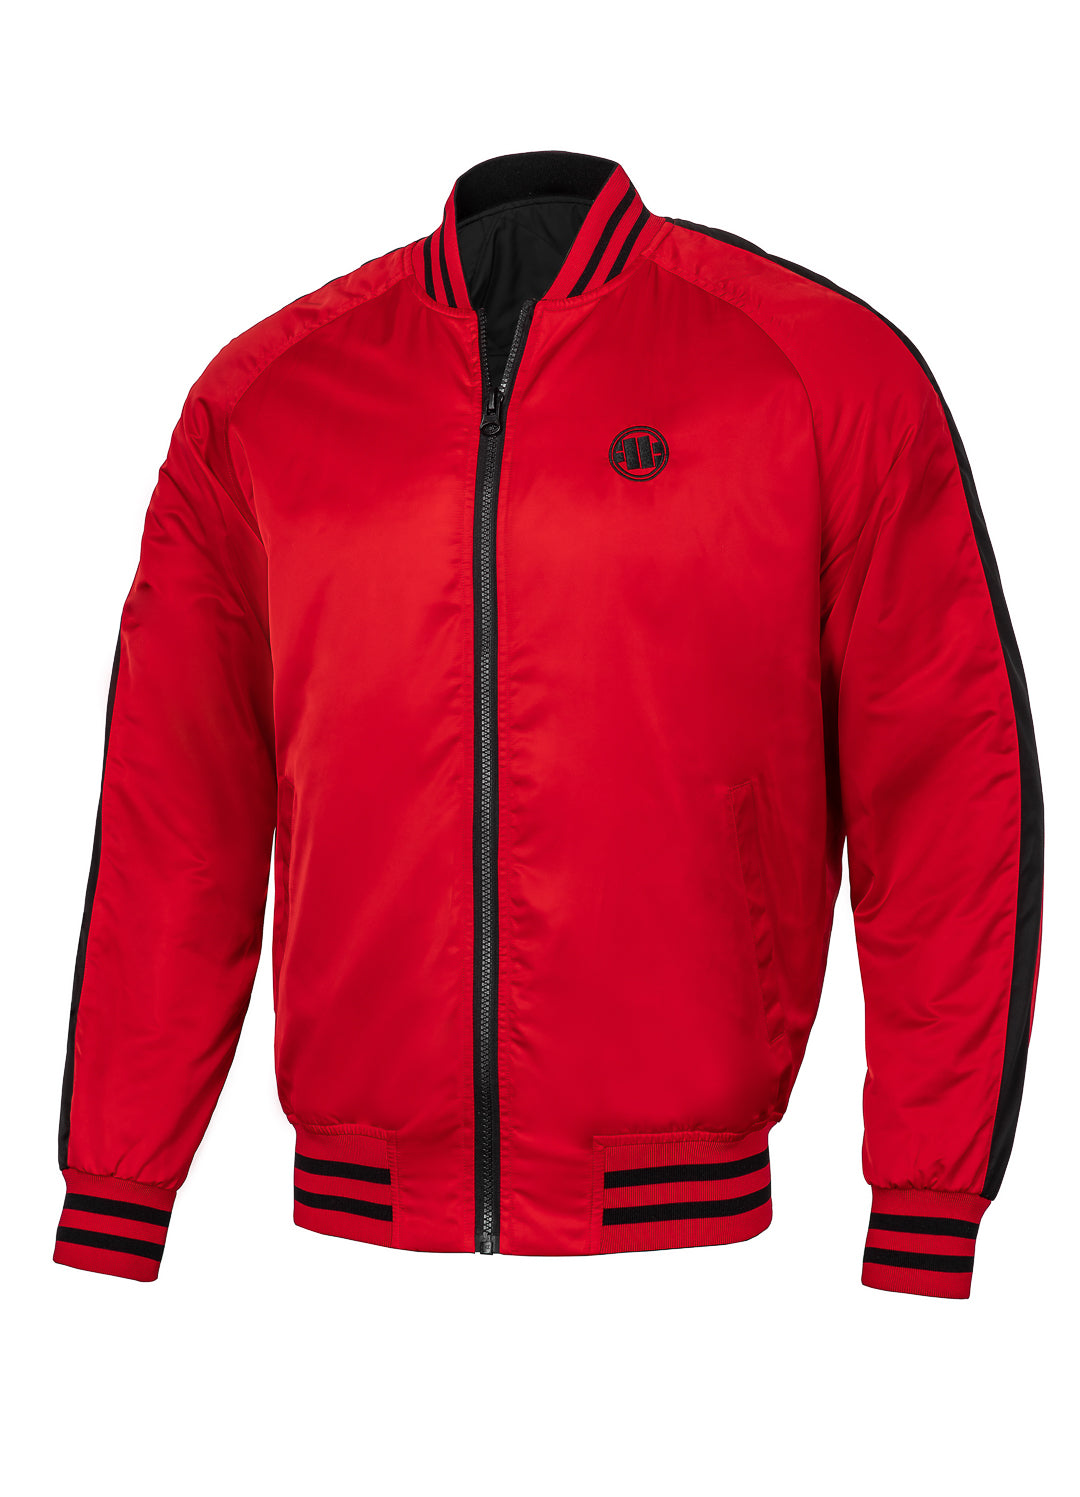 Reversible Jacket BROADWAY Red - Pitbull West Coast International Store 